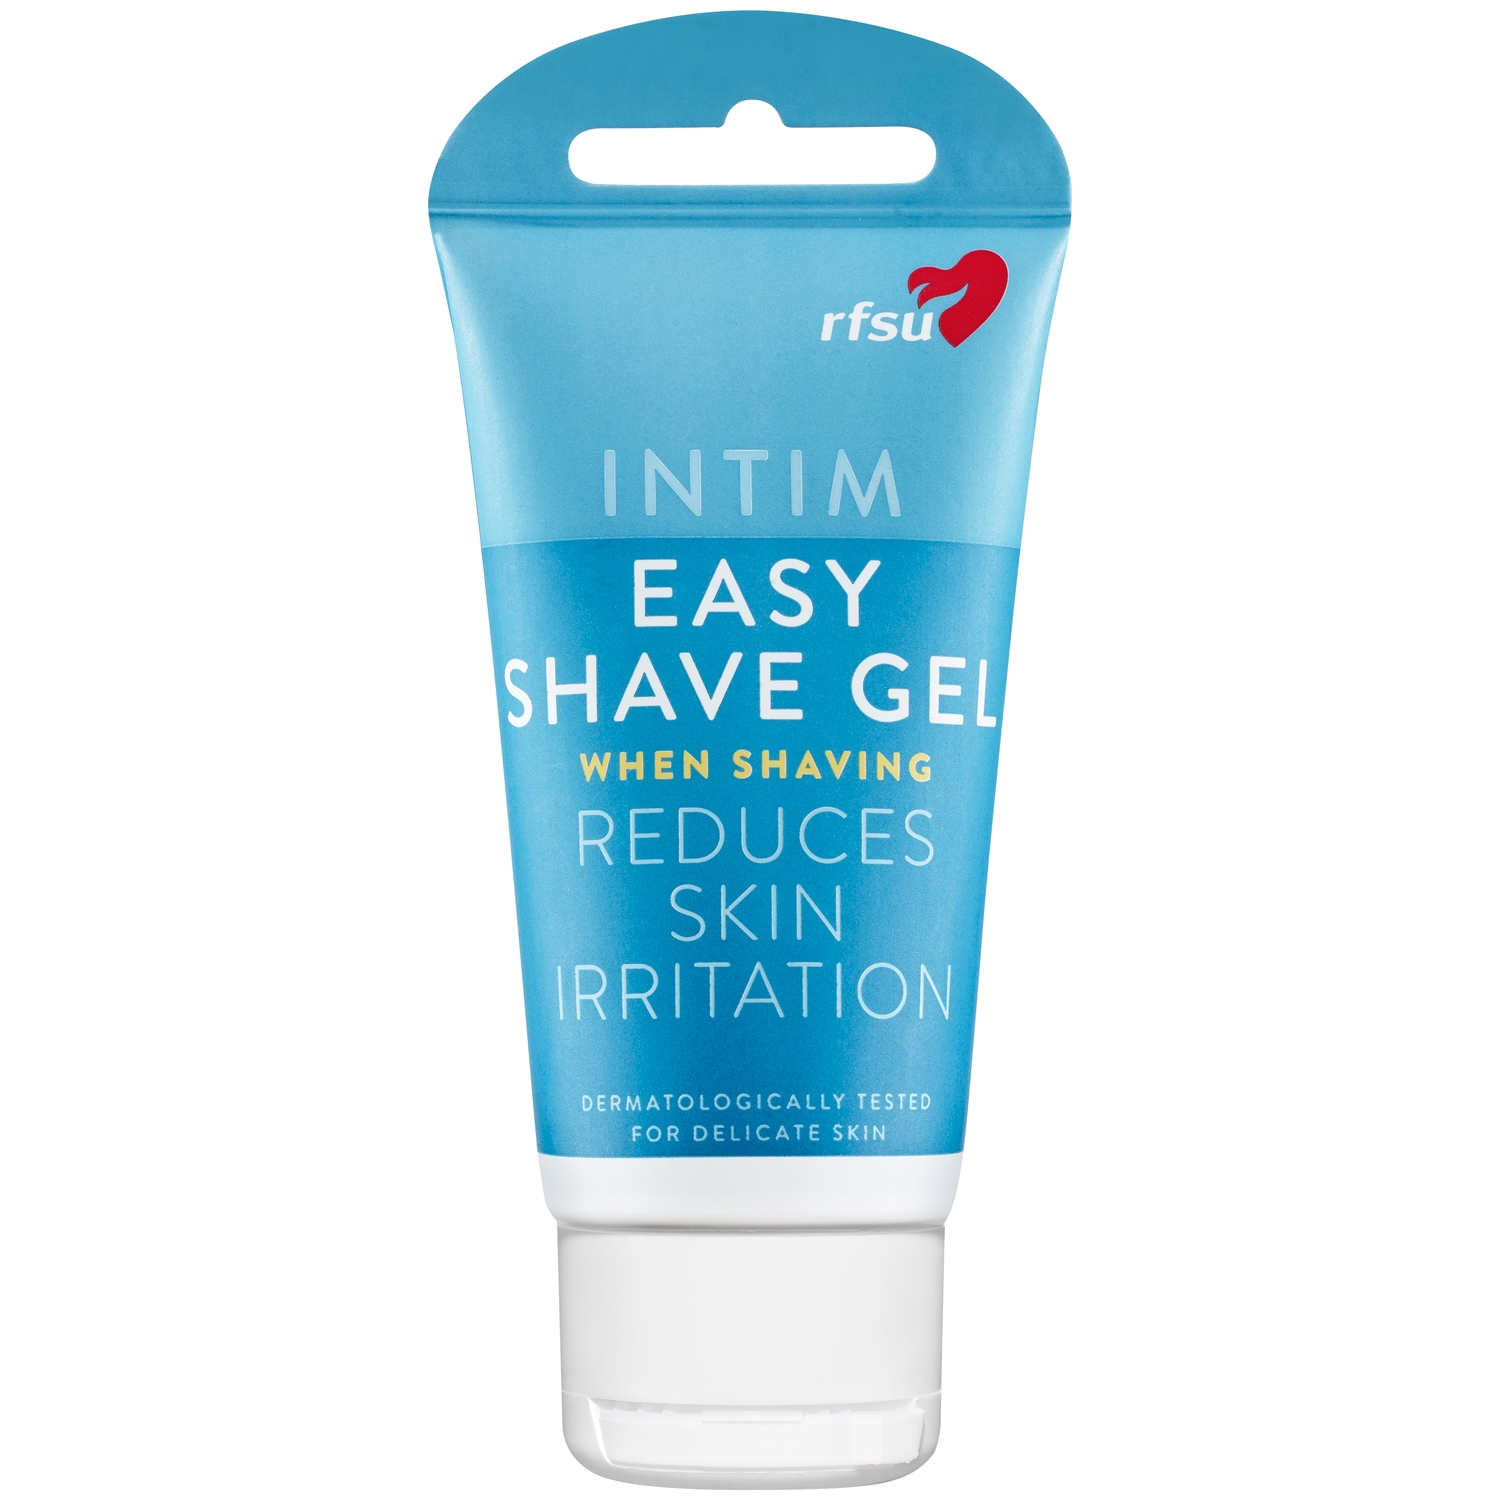 RFSU Intim Easy Shave Gel 150 ml - Klar